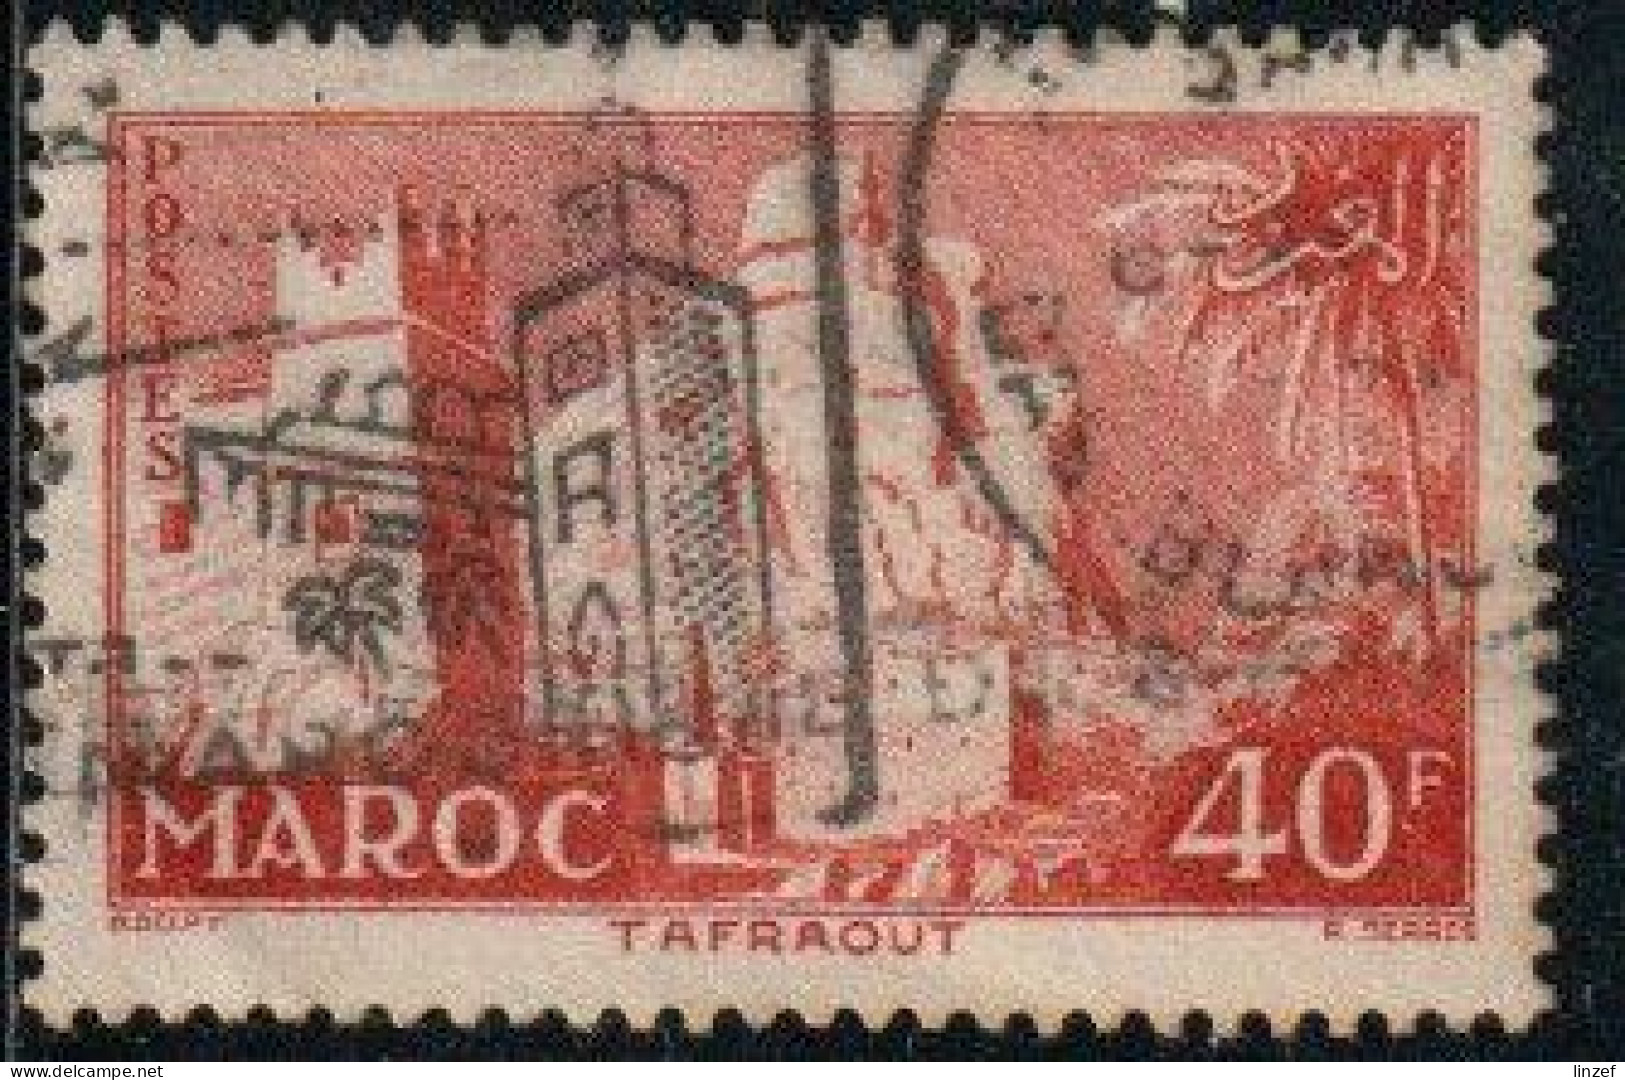 Maroc 1955 Yv. N°359 - 40f Rouge-brun Tafraout - Oblitéré - Gebraucht